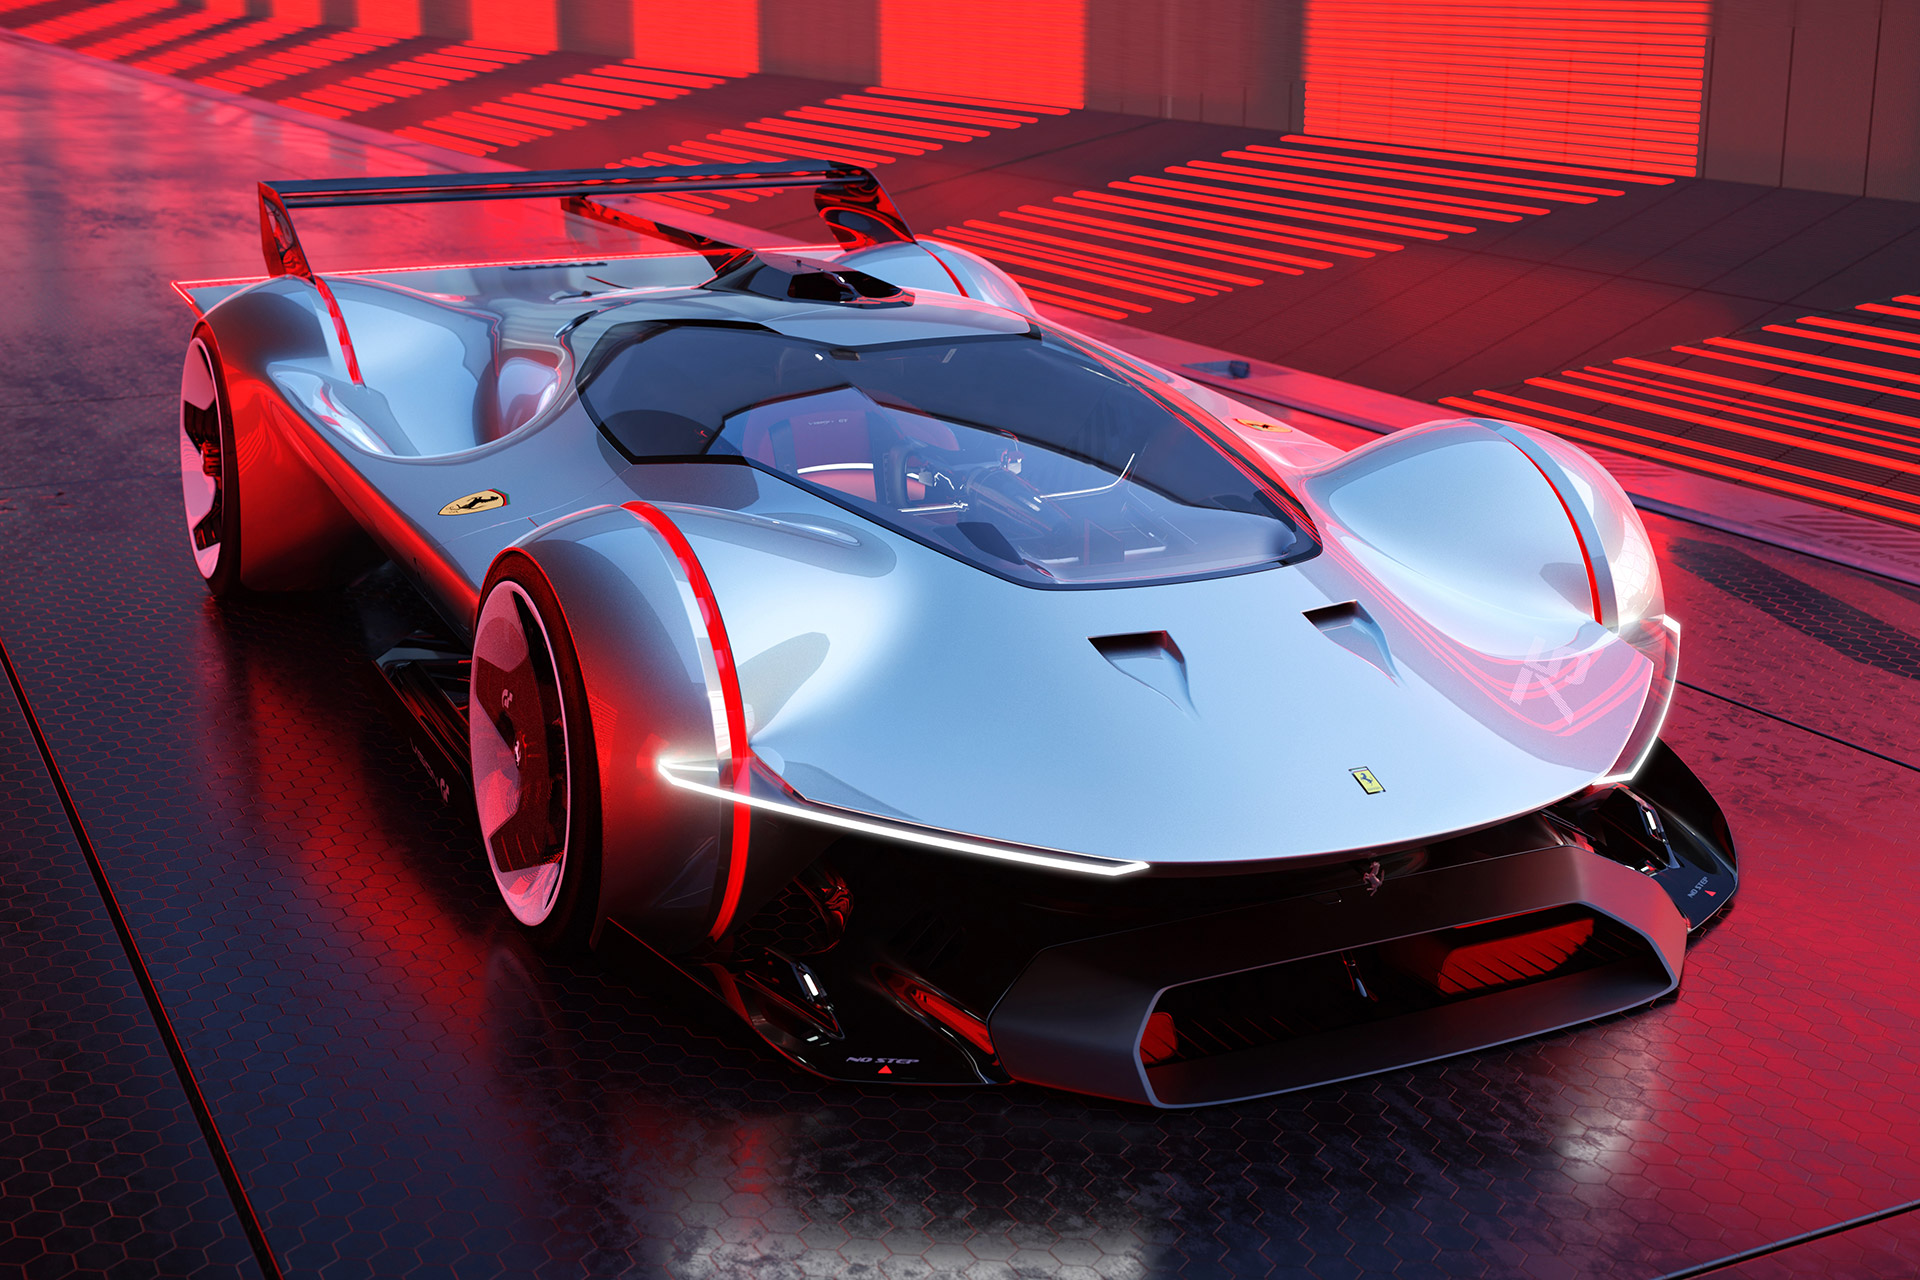 Ferrari Vision Gran Turismo Concept, #Ferrari #Vision #Gran #Turismo #Concept